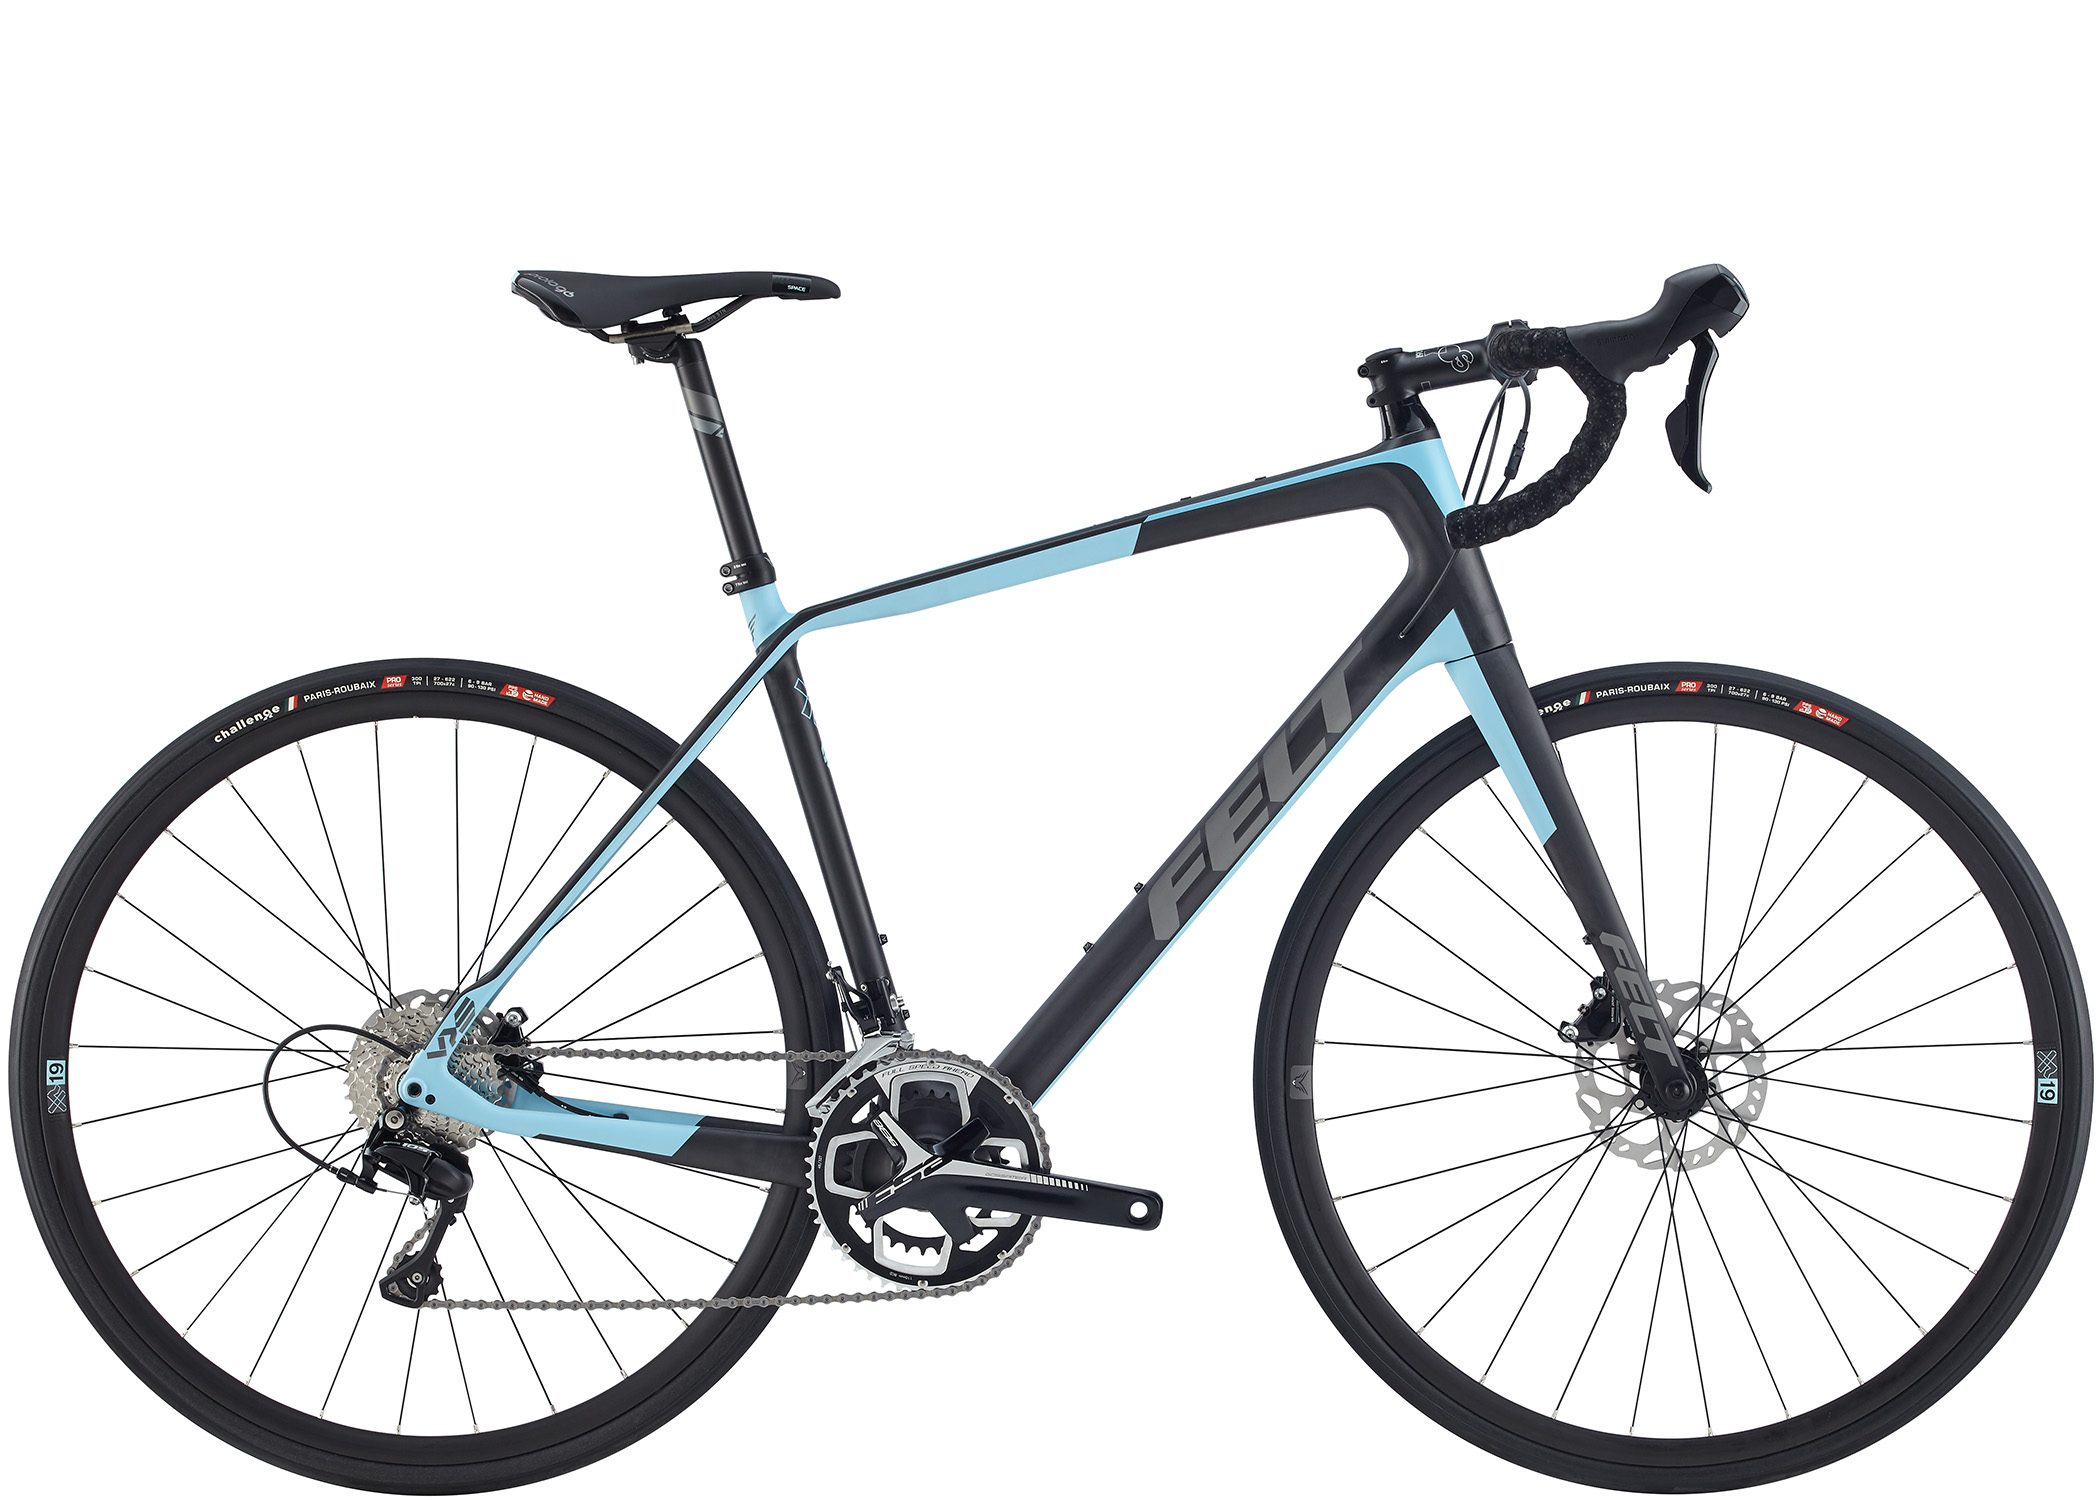 2018 Felt VR5 Carbon Fiber 105 DISC Road Bike Char/Lt Blue 47cm Retail $2600 